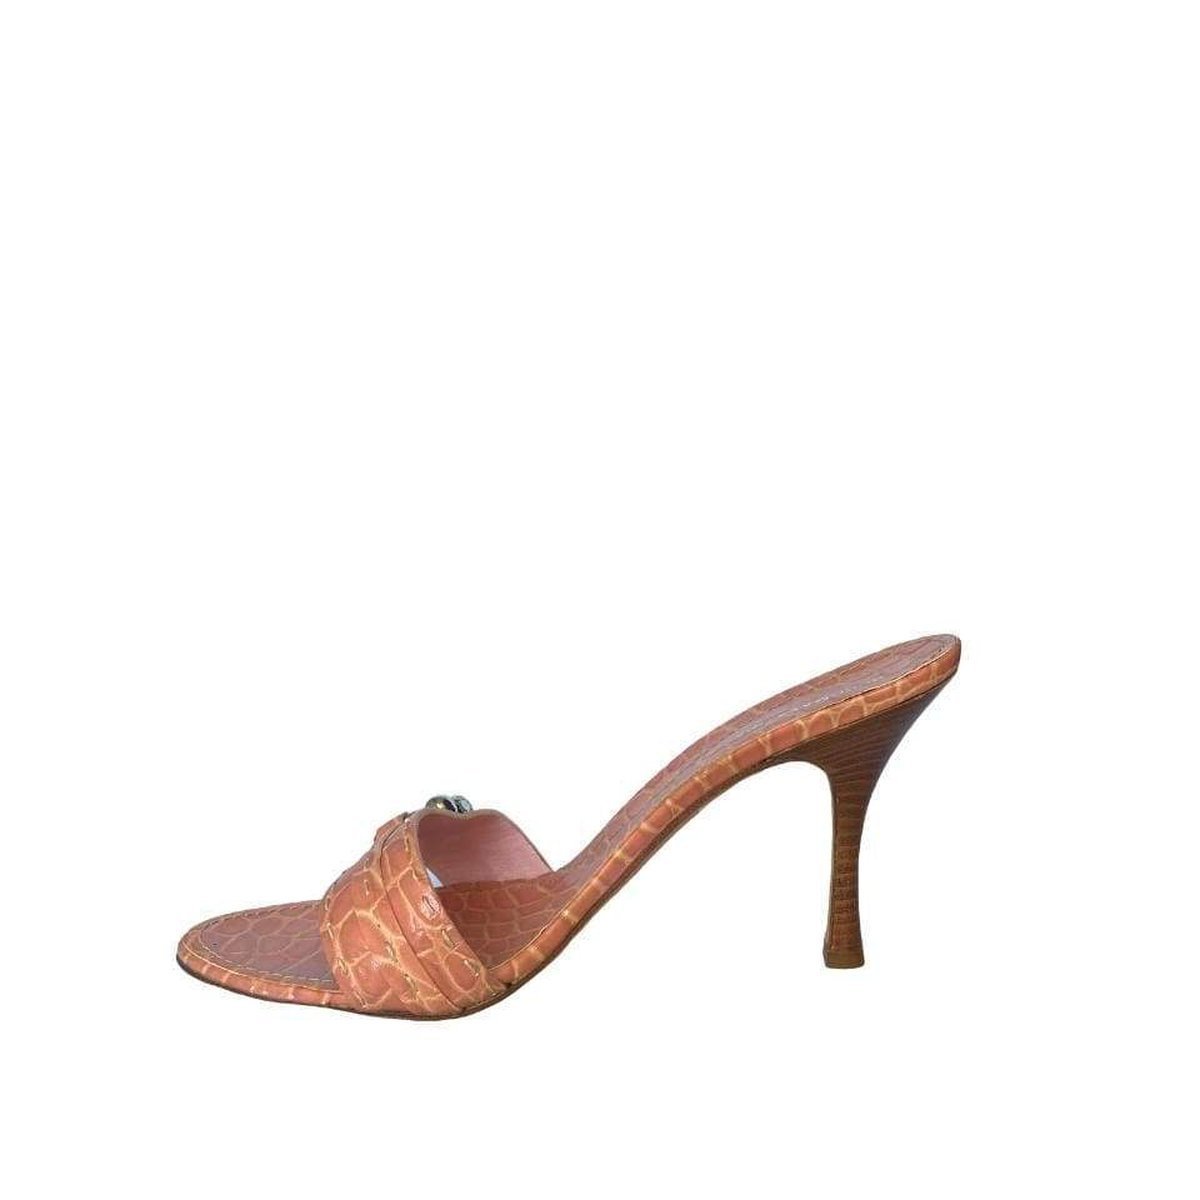 Safe Leather Stiletto Heel Mule Sandal